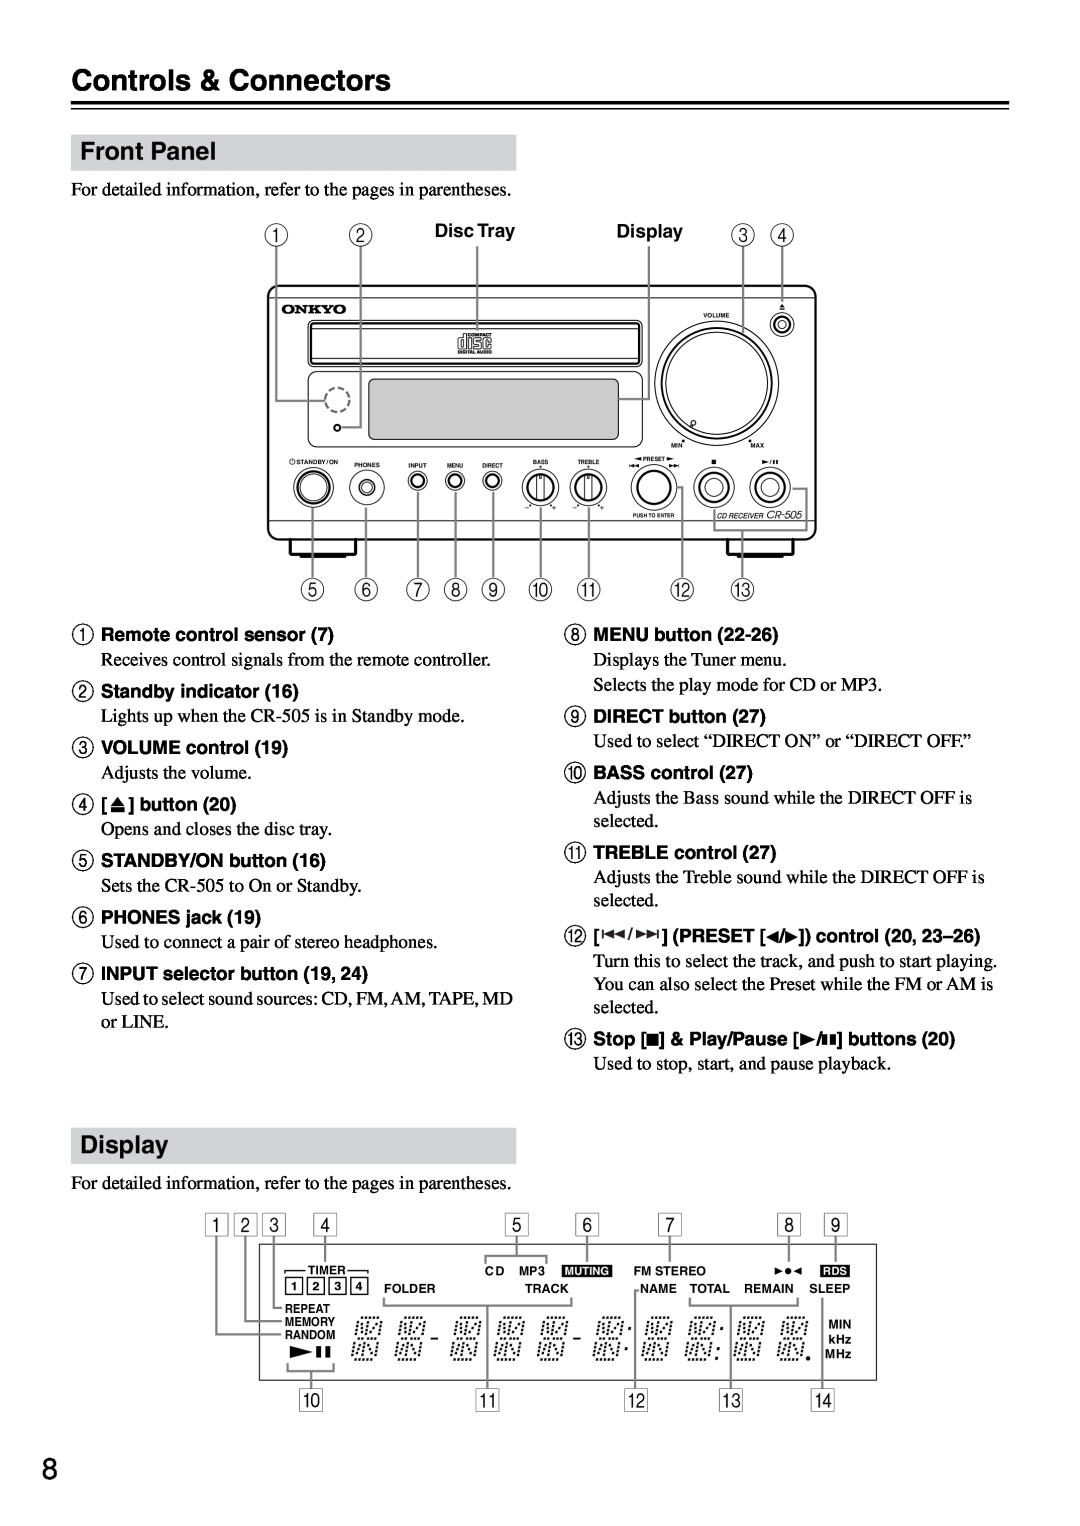 Onkyo CR-505 instruction manual Controls & Connectors, Front Panel, 5 6 7 8 9 0 A B C, Display 